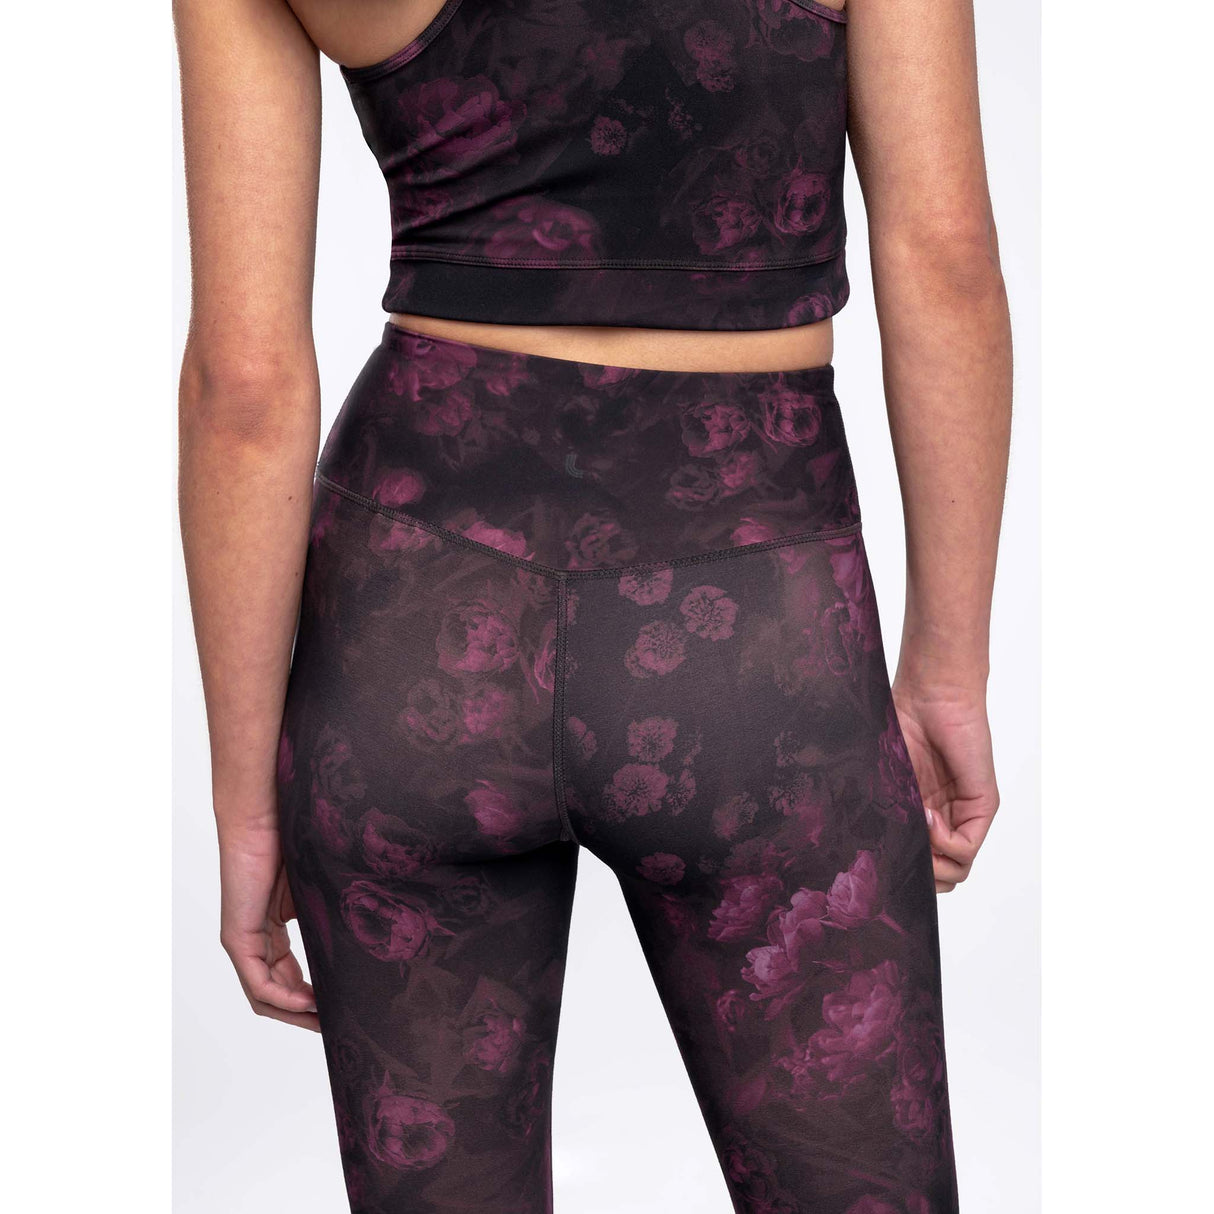 Lole leggings 7/8 taille haute Dalia crushed bloom purple pour femme dos